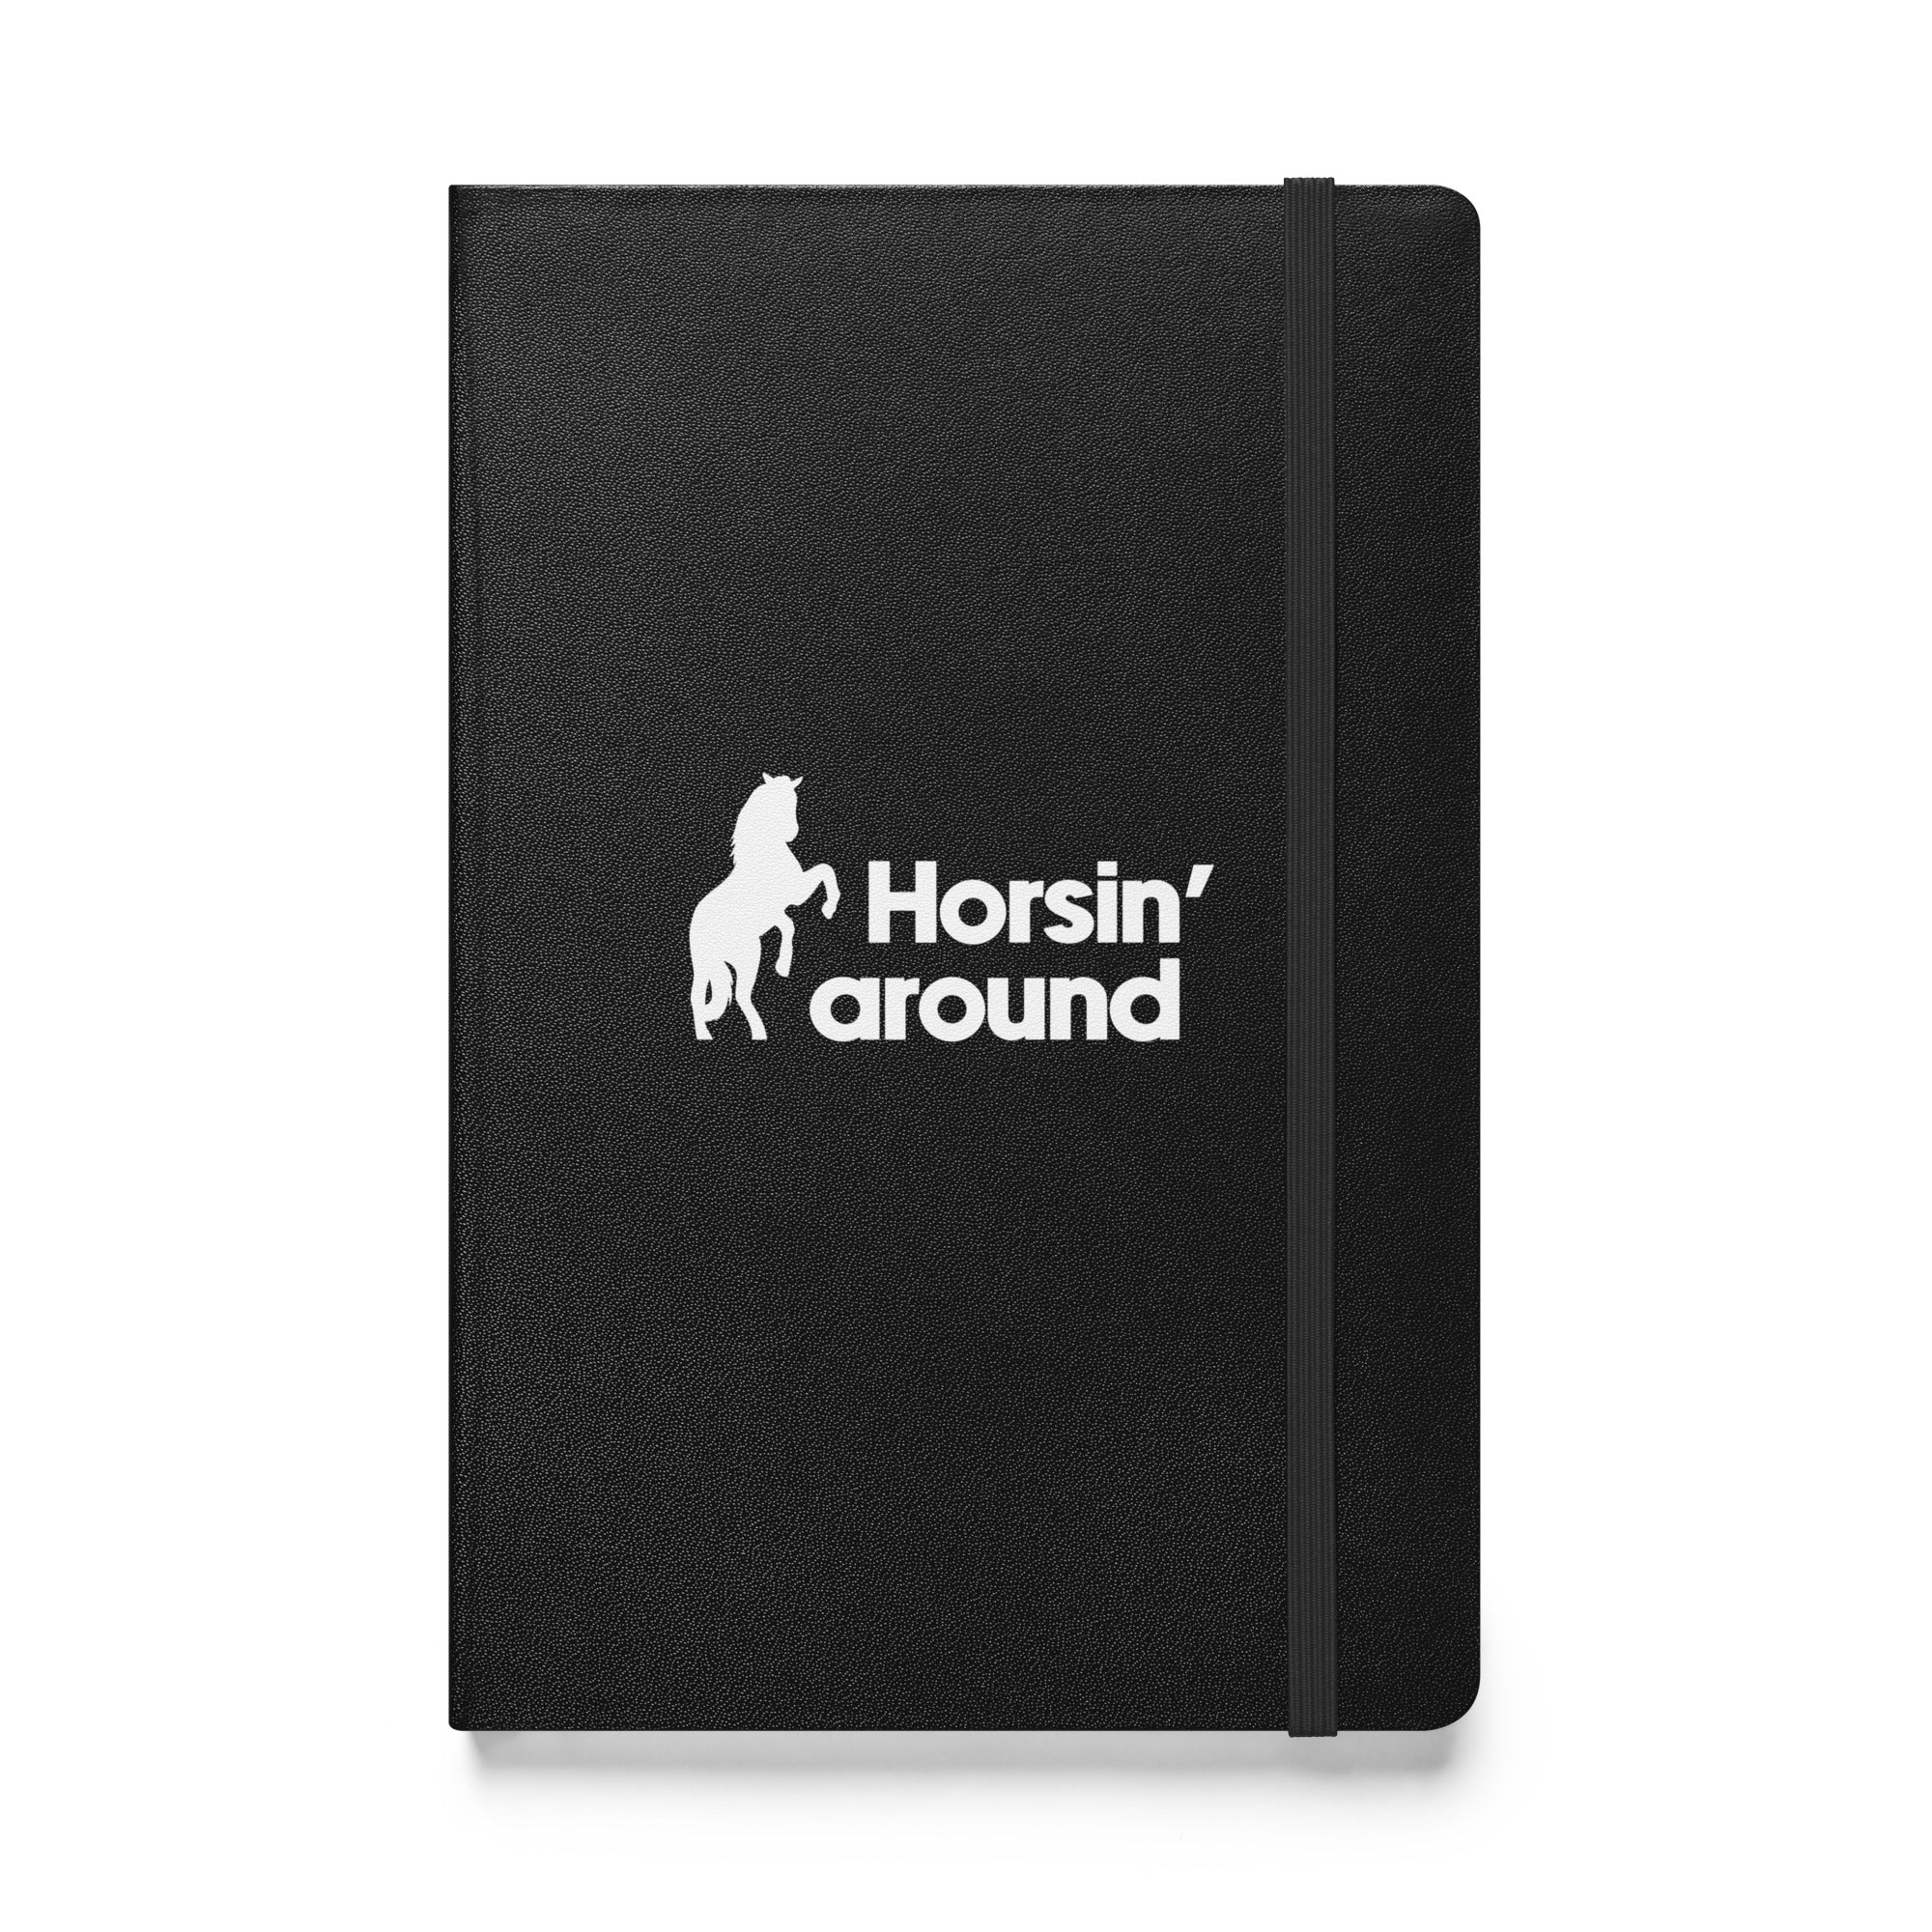 Horsin' around Hardcover Notebook